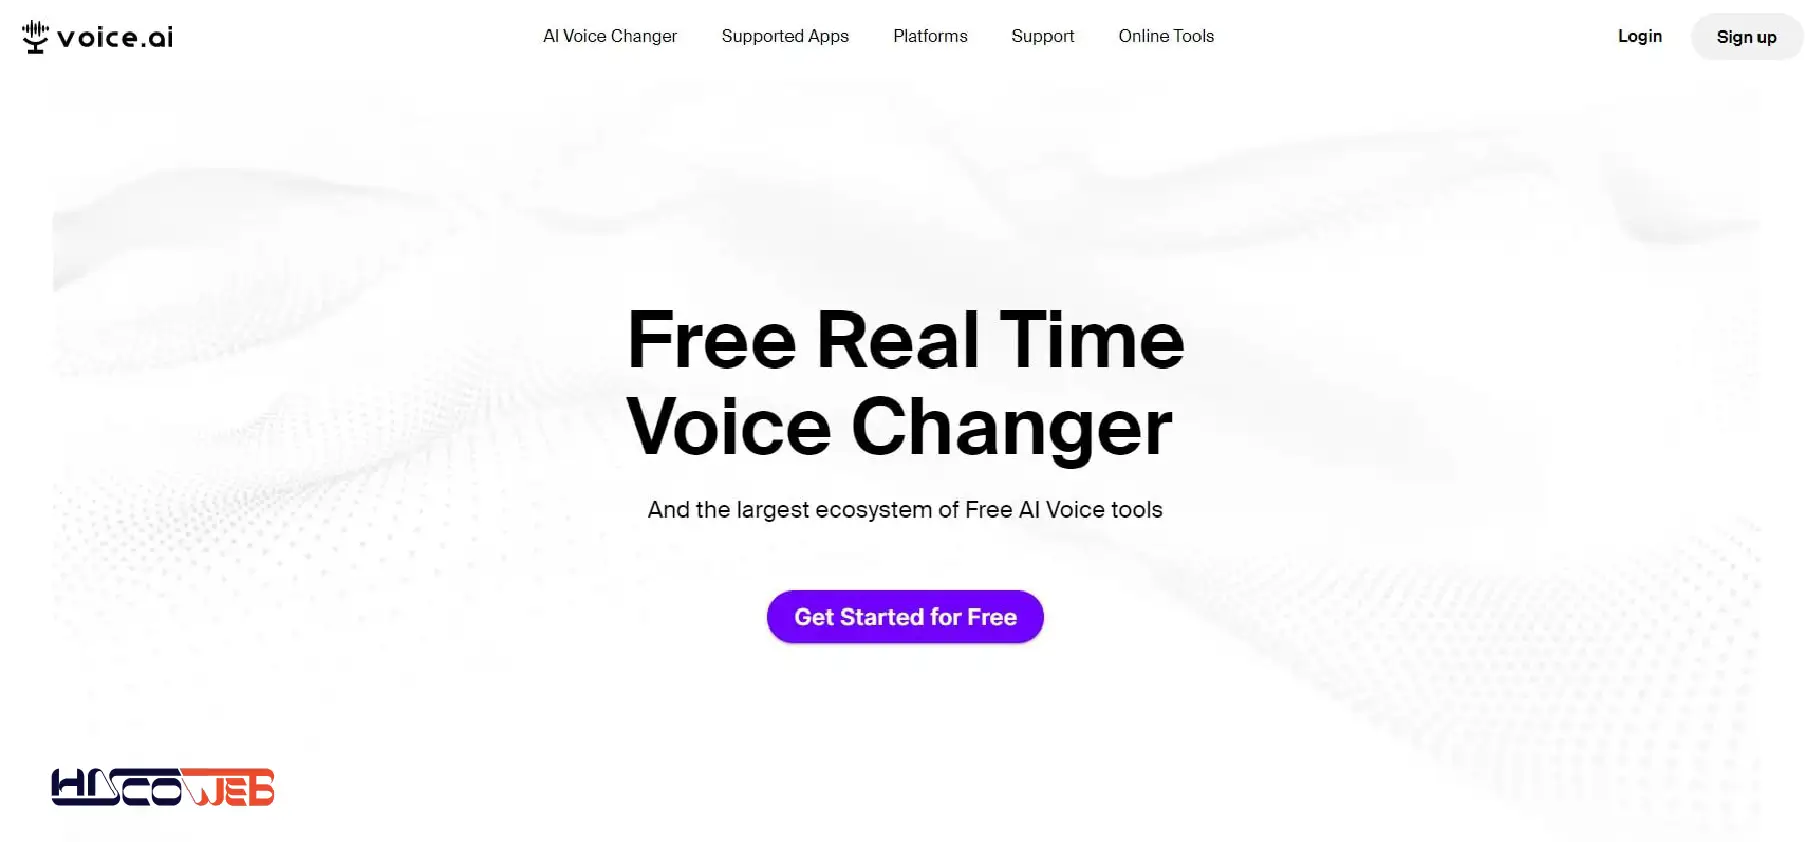 5. Voice.ai: بهترین تغییر دهنده صدای هوش مصنوعی برای تغییر صدا در زمان واقعی